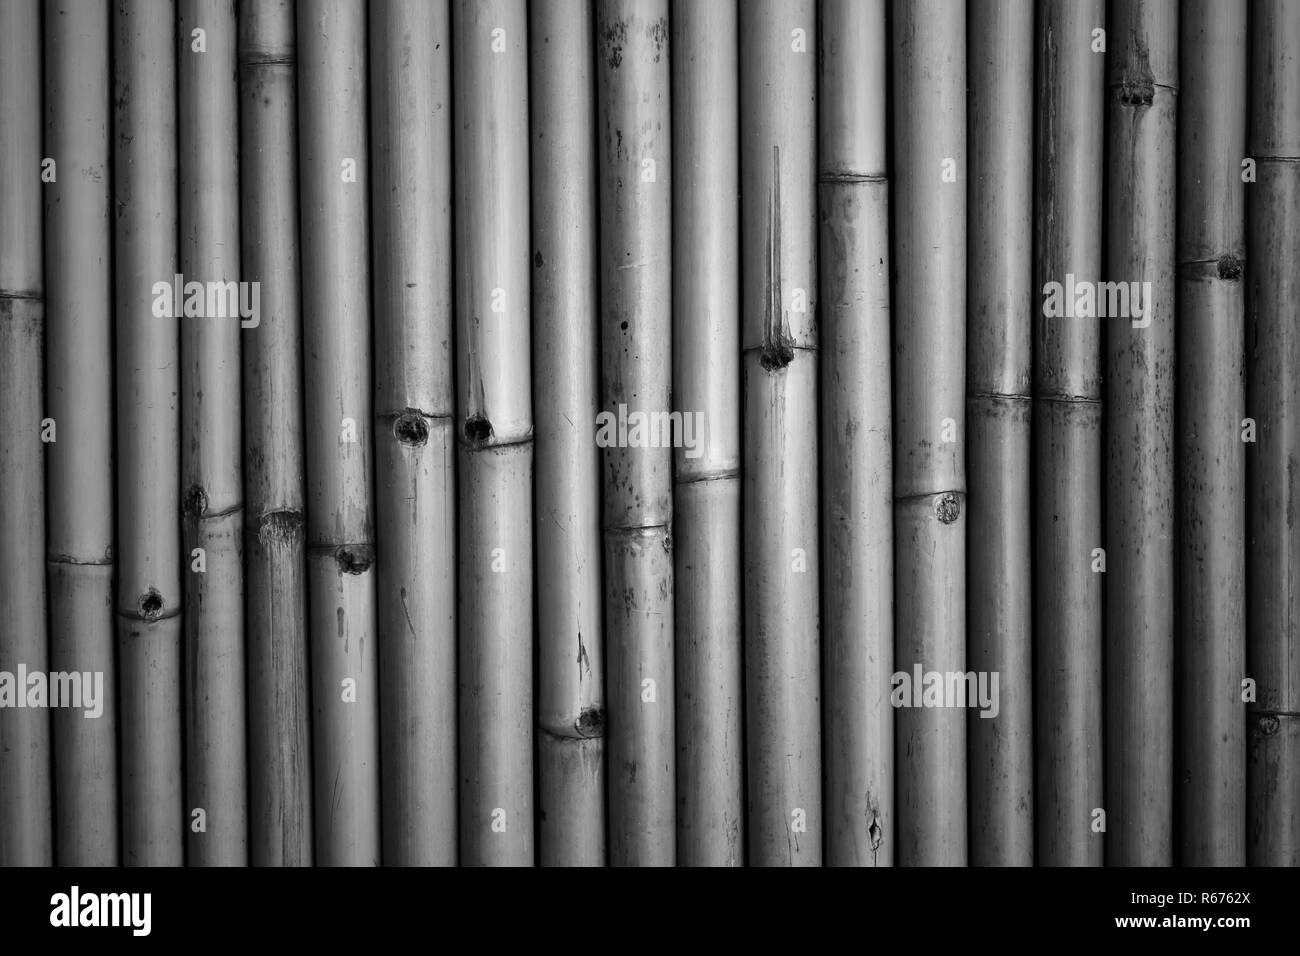 Wall of bamboo log Stock Photo